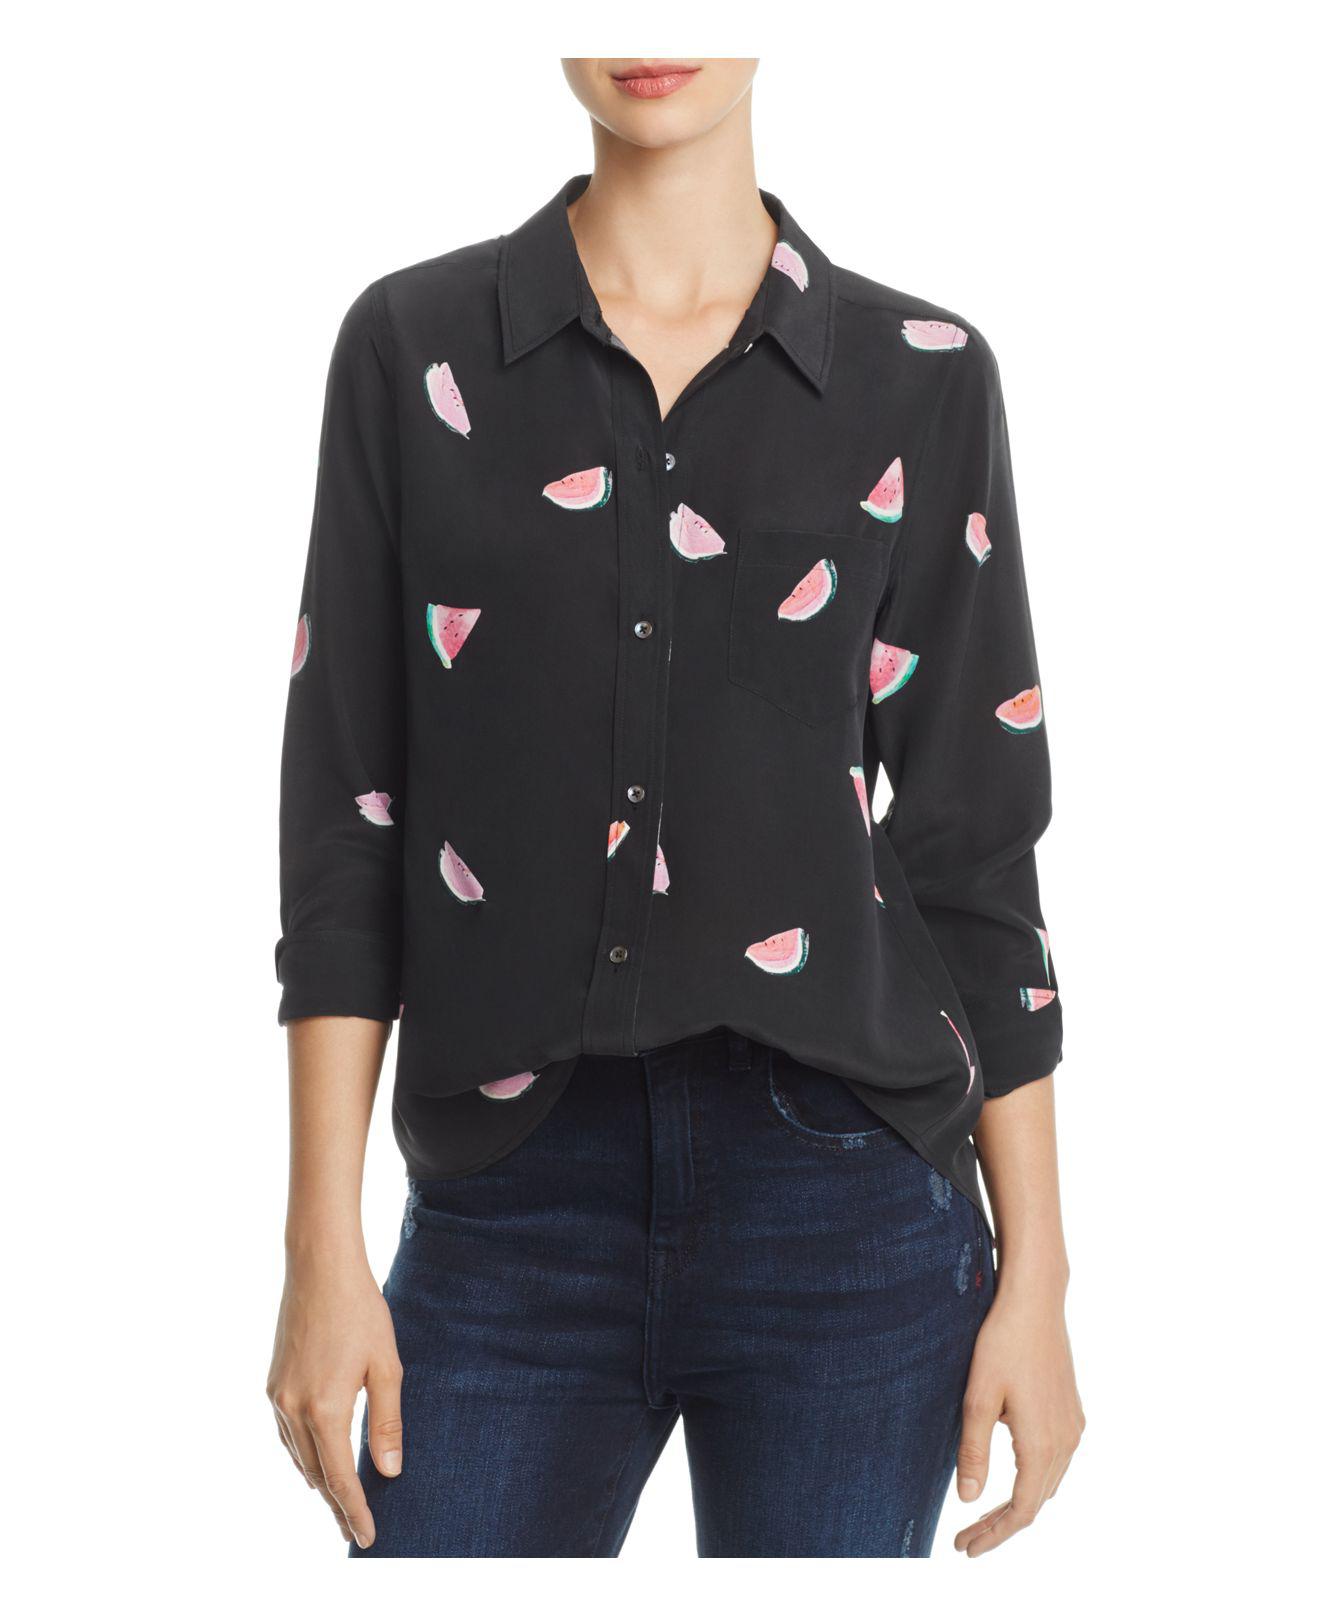 Lyst - Rails Kate Watermelon Print Silk Shirt in Black